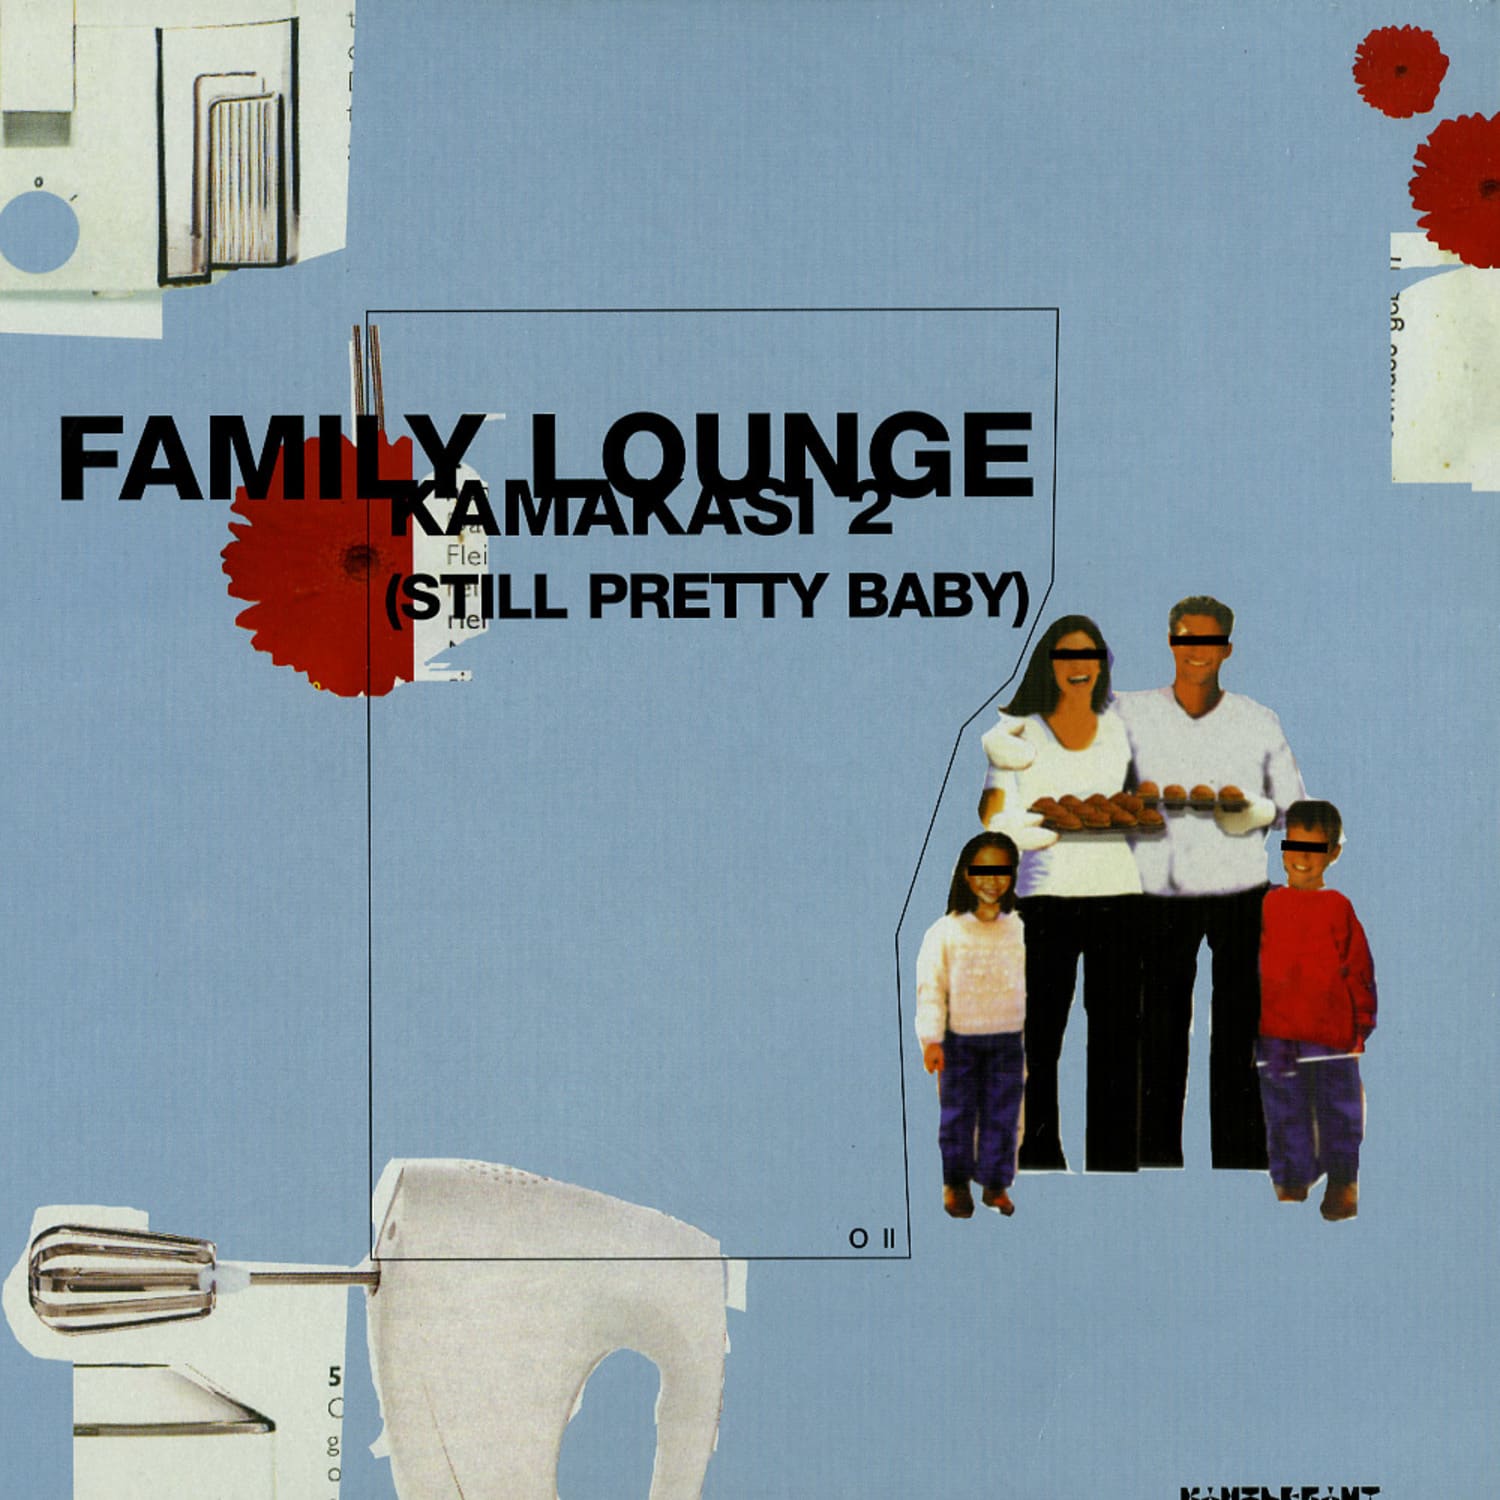 Family Lounge  - KAMAKASI 2 